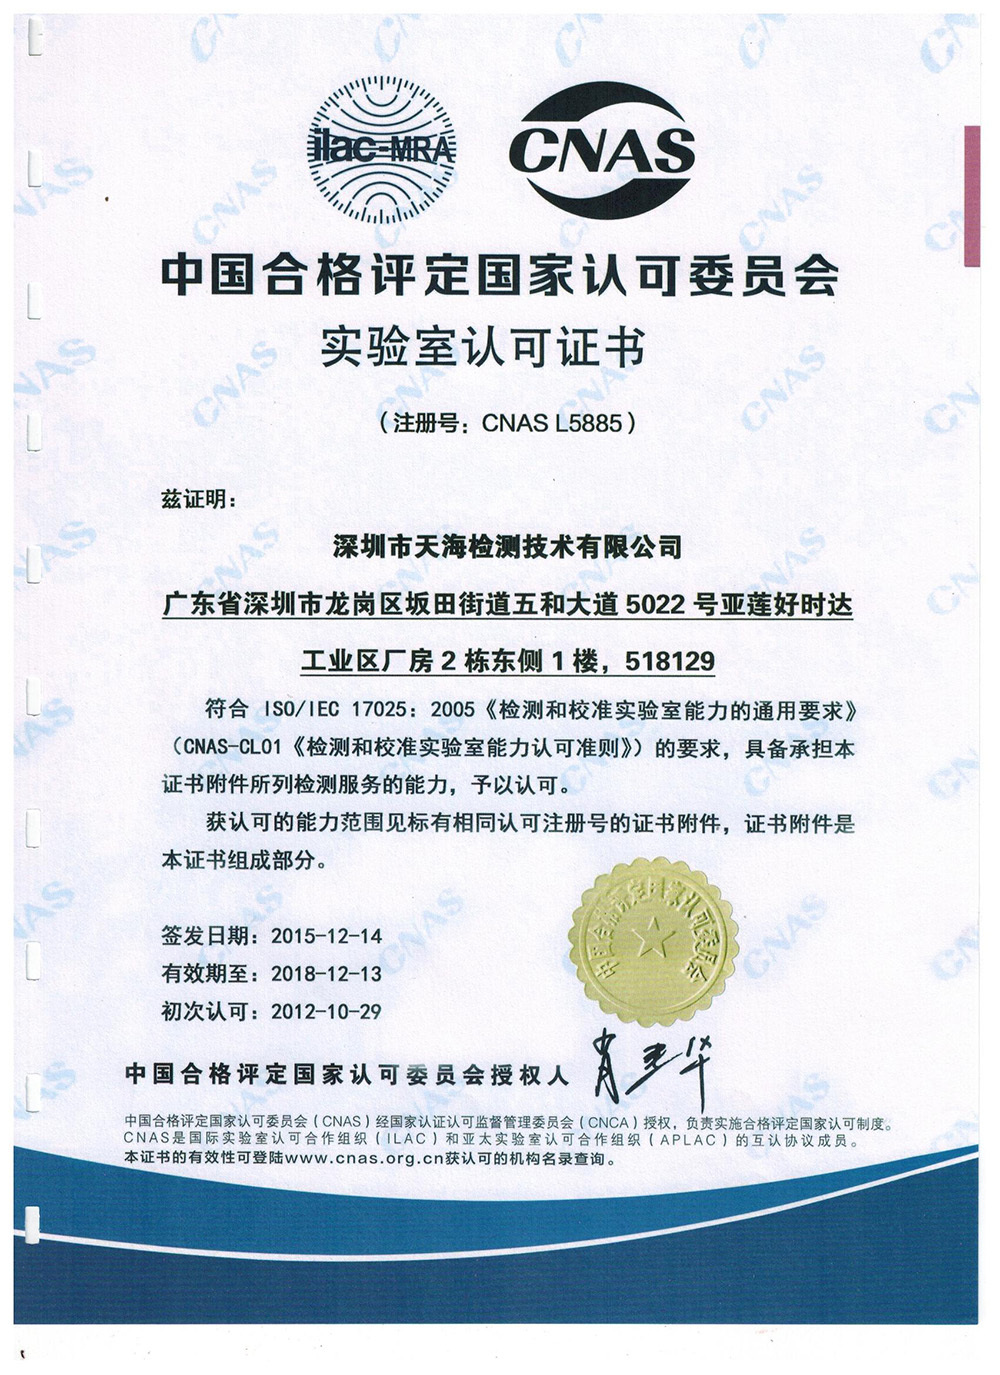 Tianhai testing laboratory accreditation certificate